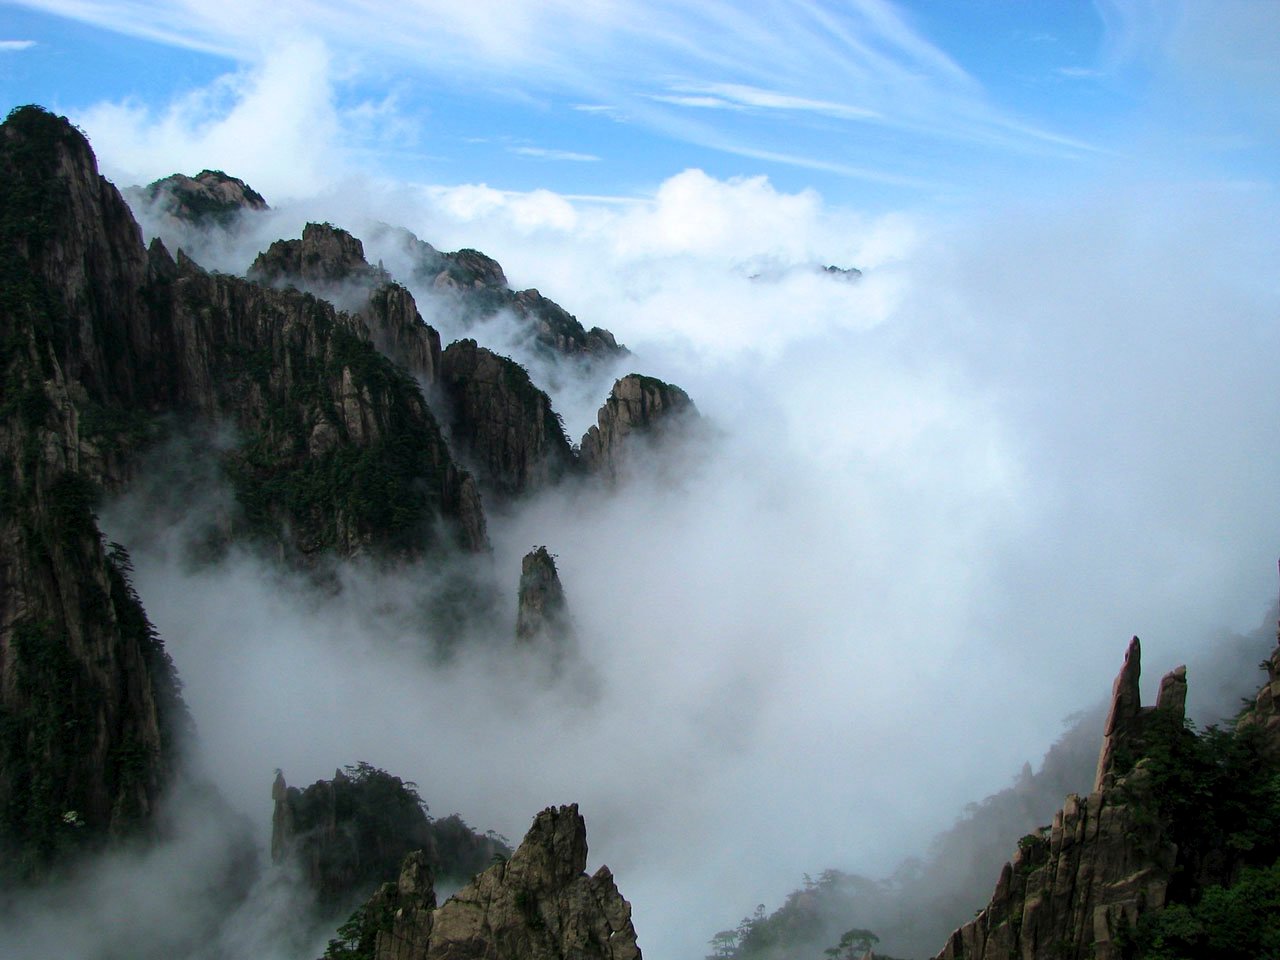 Zafiri - Mt. Huangshan: Majesty in the Middle Kingdom